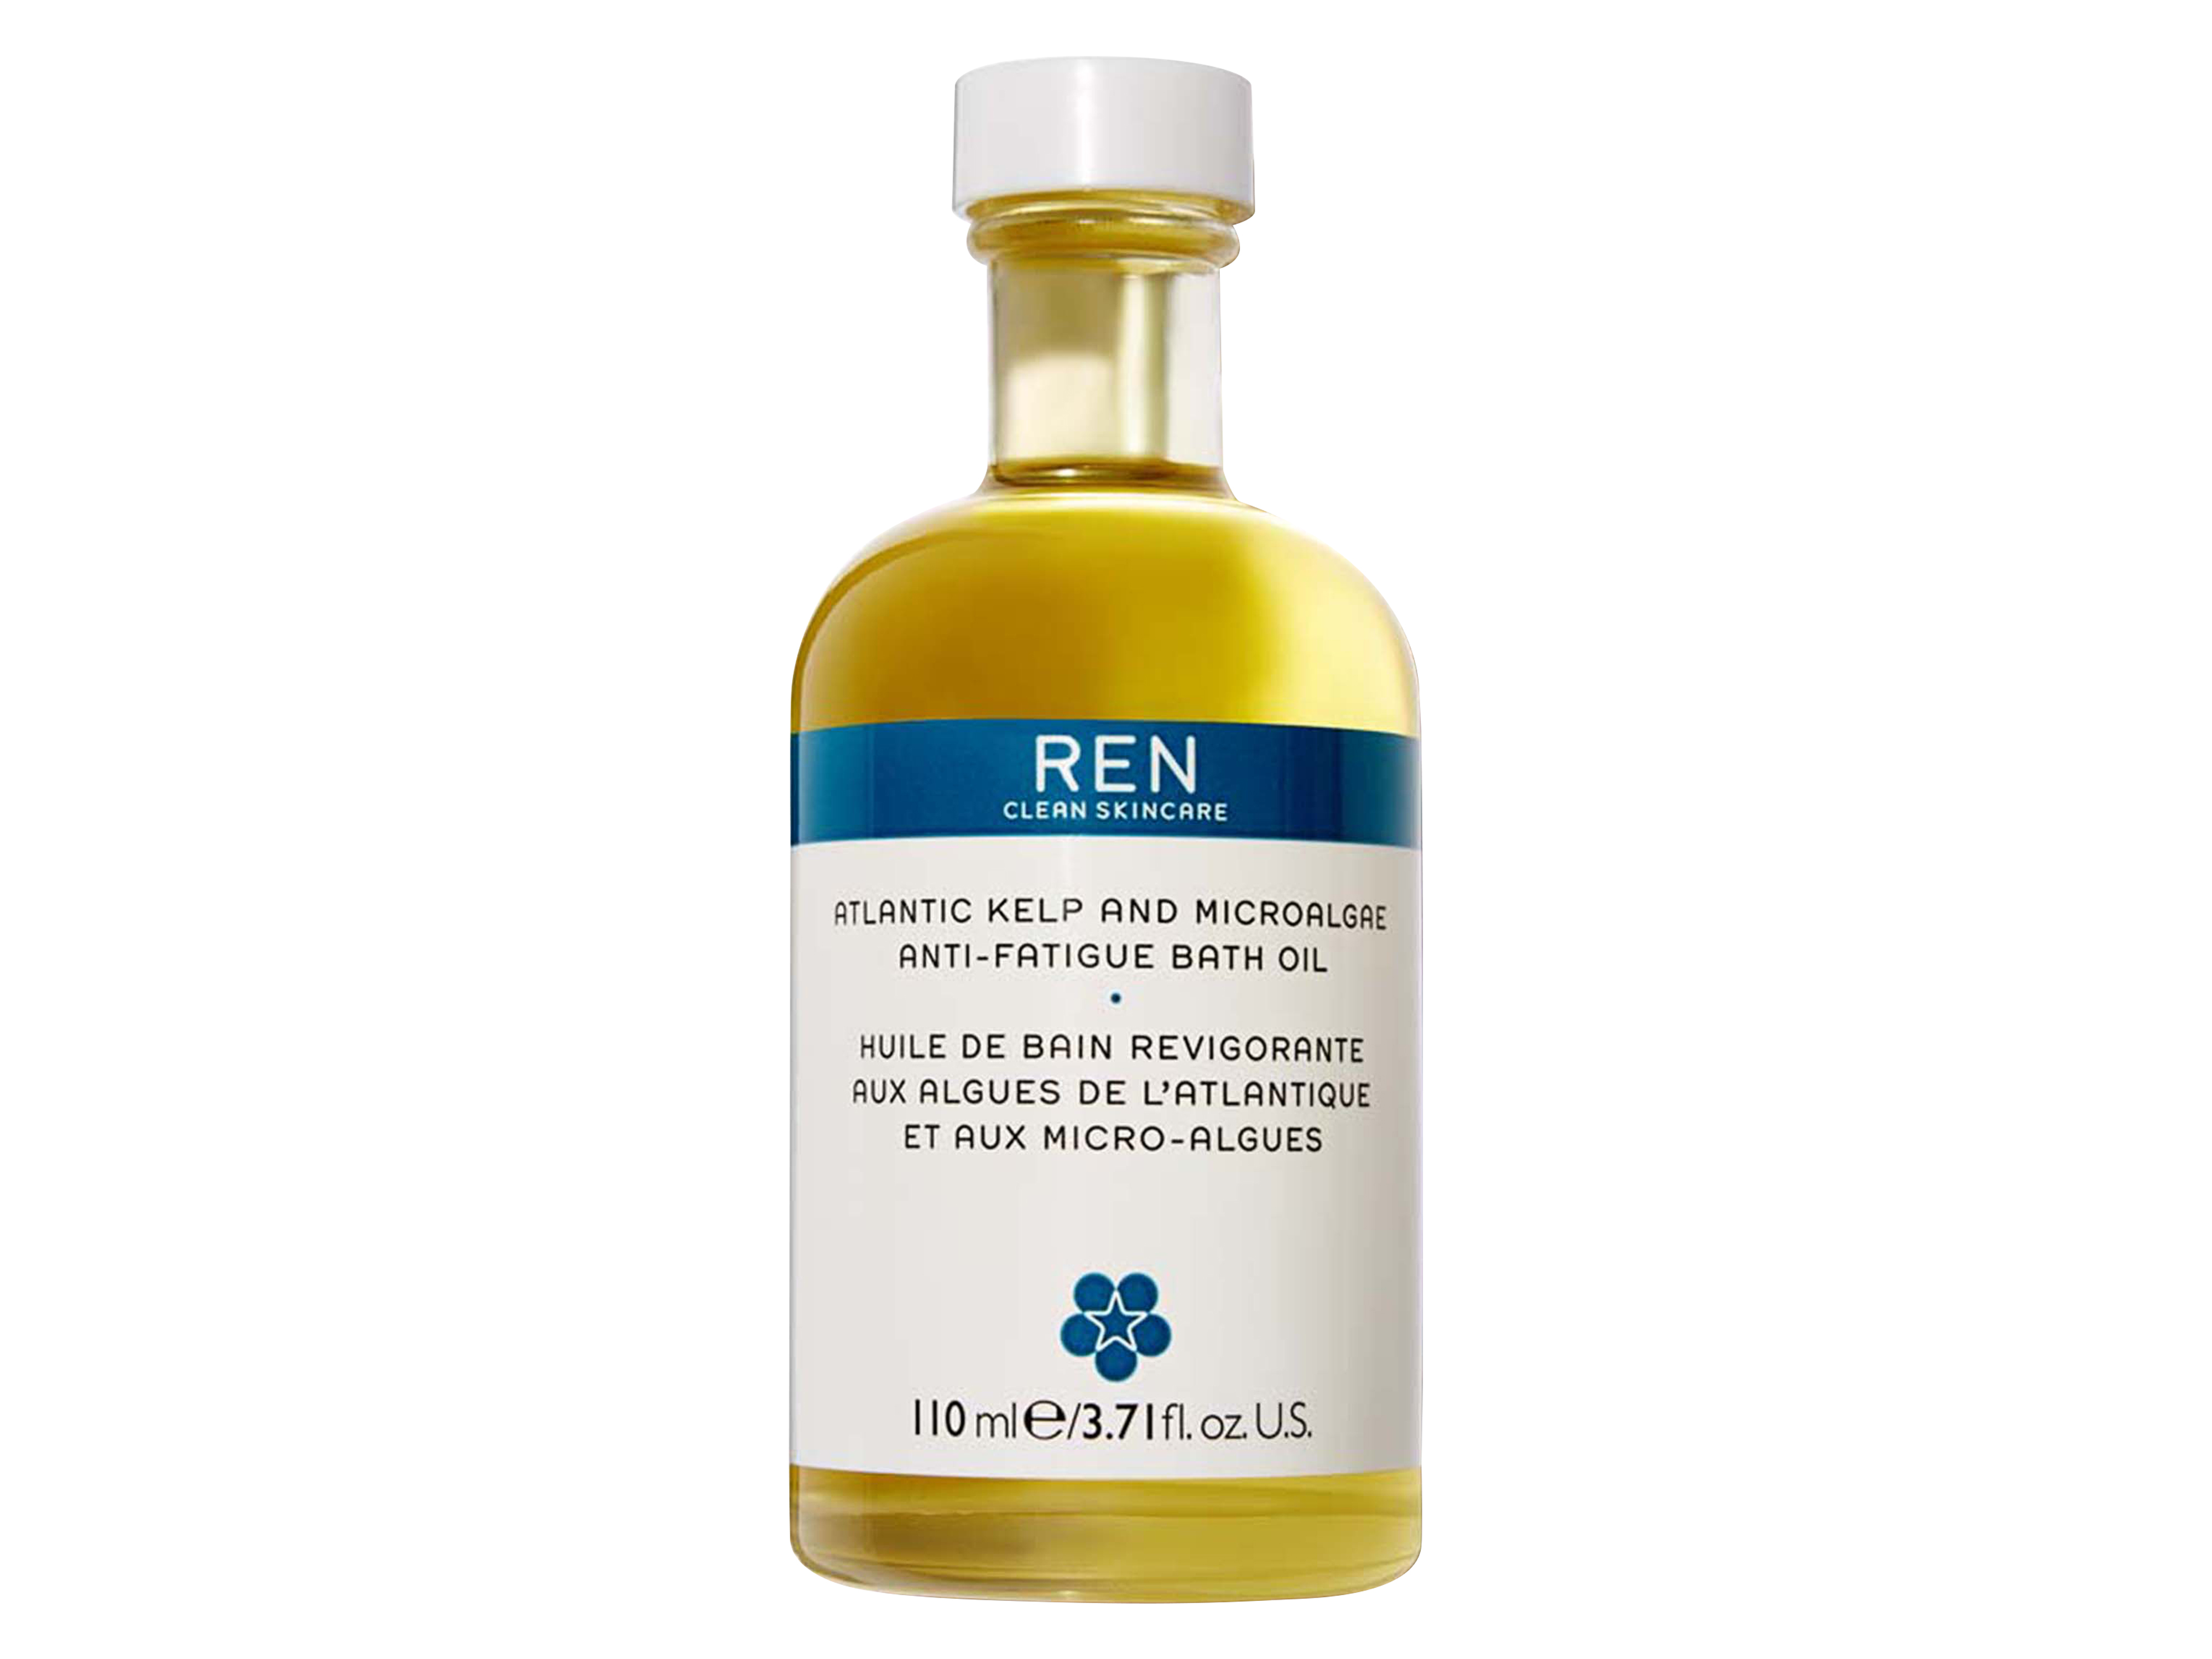 REN Atlantic Kelp And Microalgae Anti-Fatigue Bath Oil, 110 ml